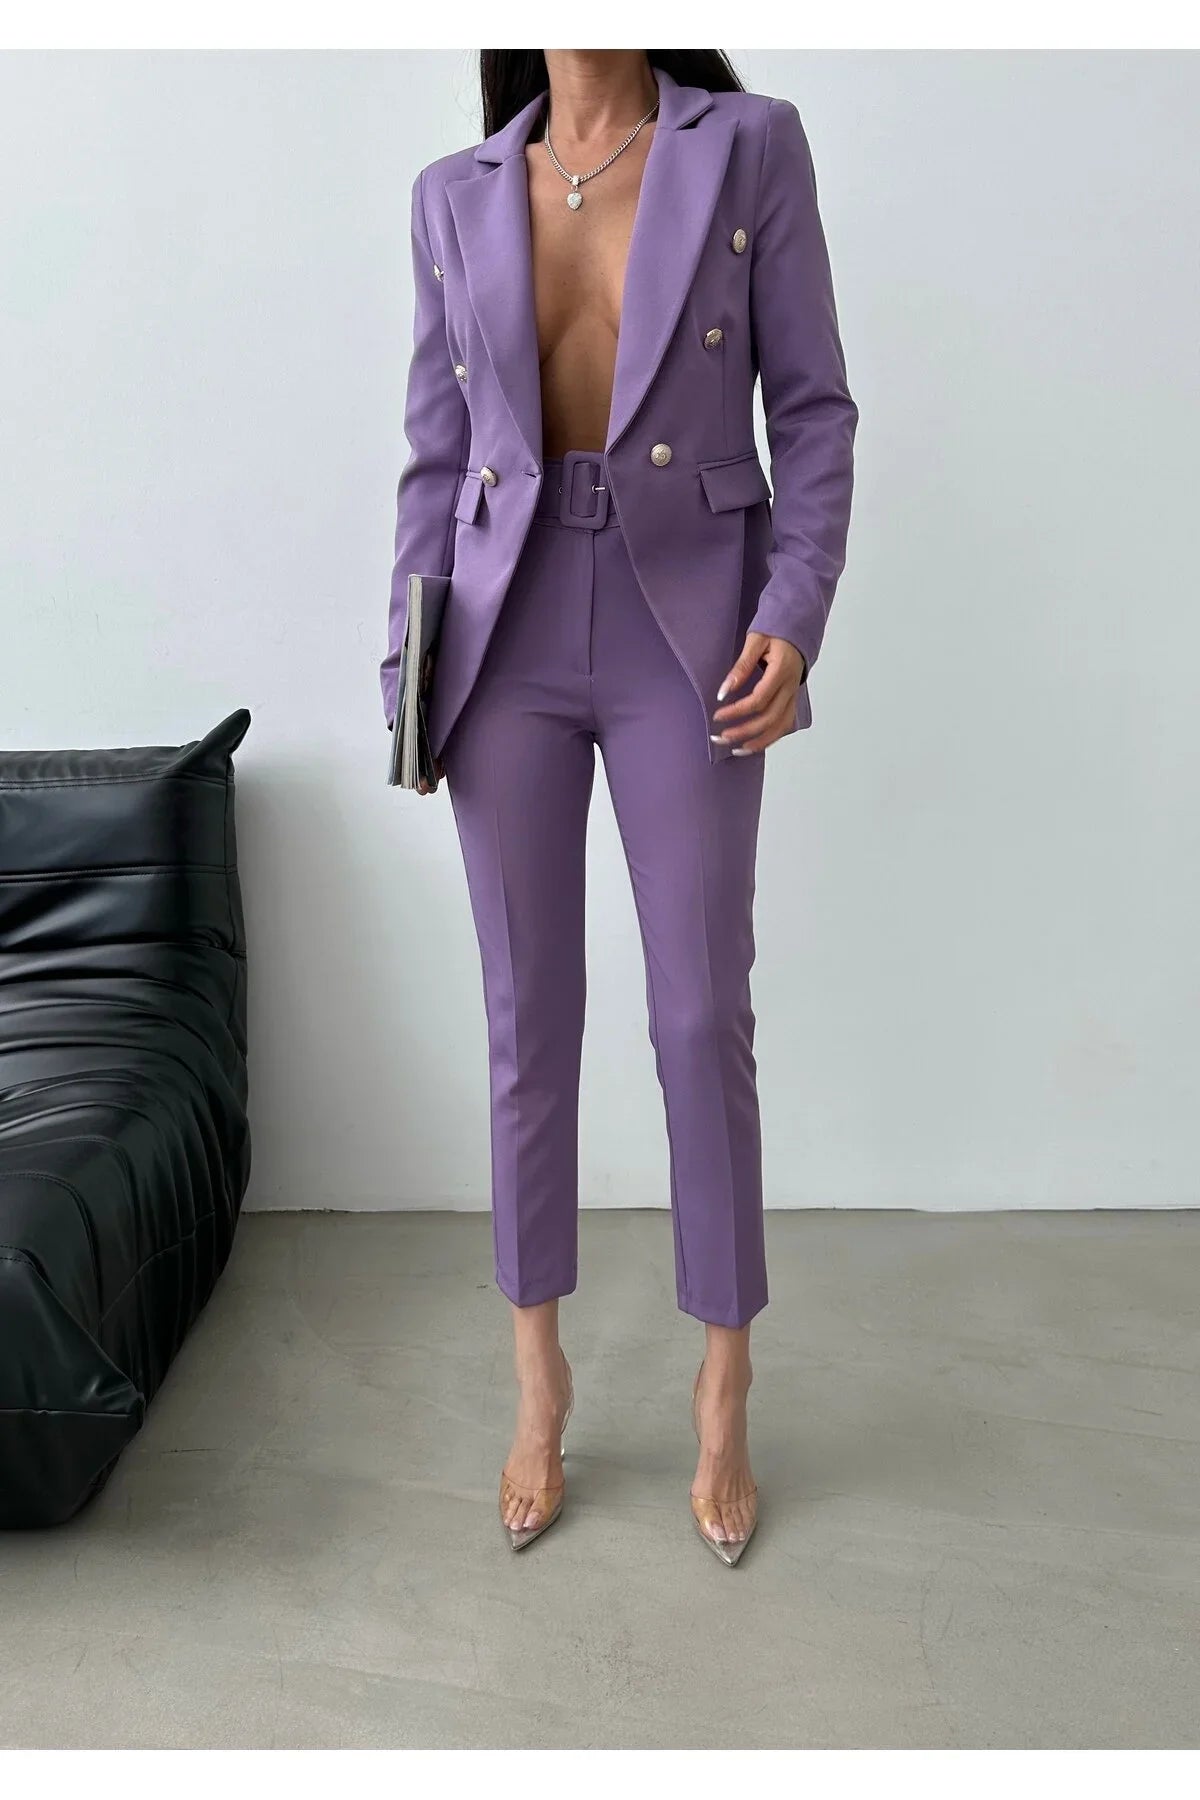 Female Clothing Women's Button Blazer Jacket Stretchy Pants Sets